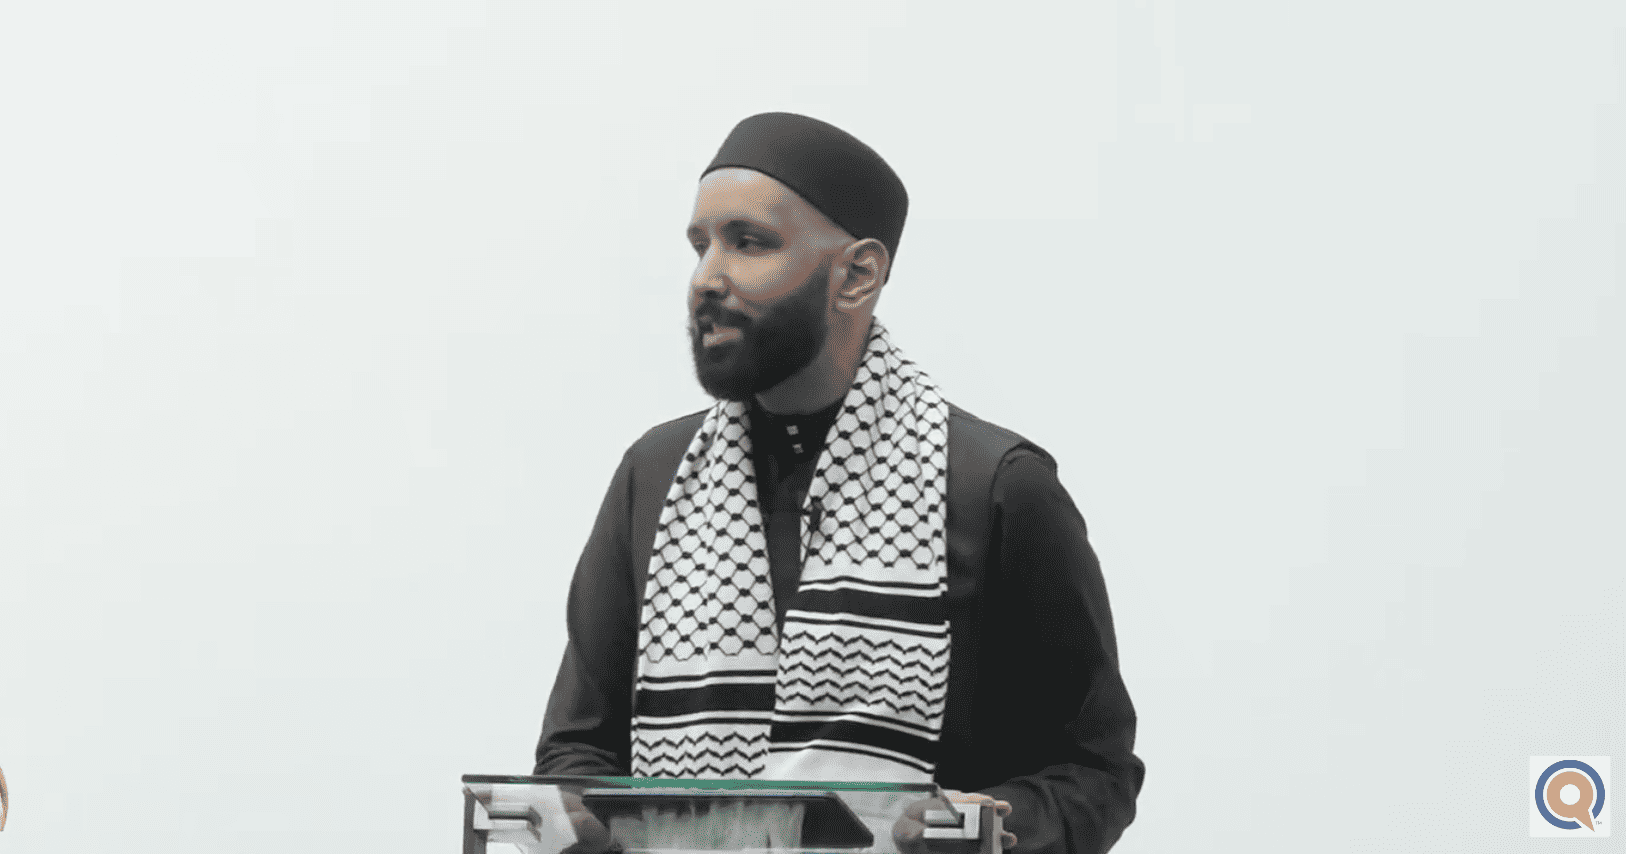 Omar Suleiman – Ramadan Joy and Gaza Depression